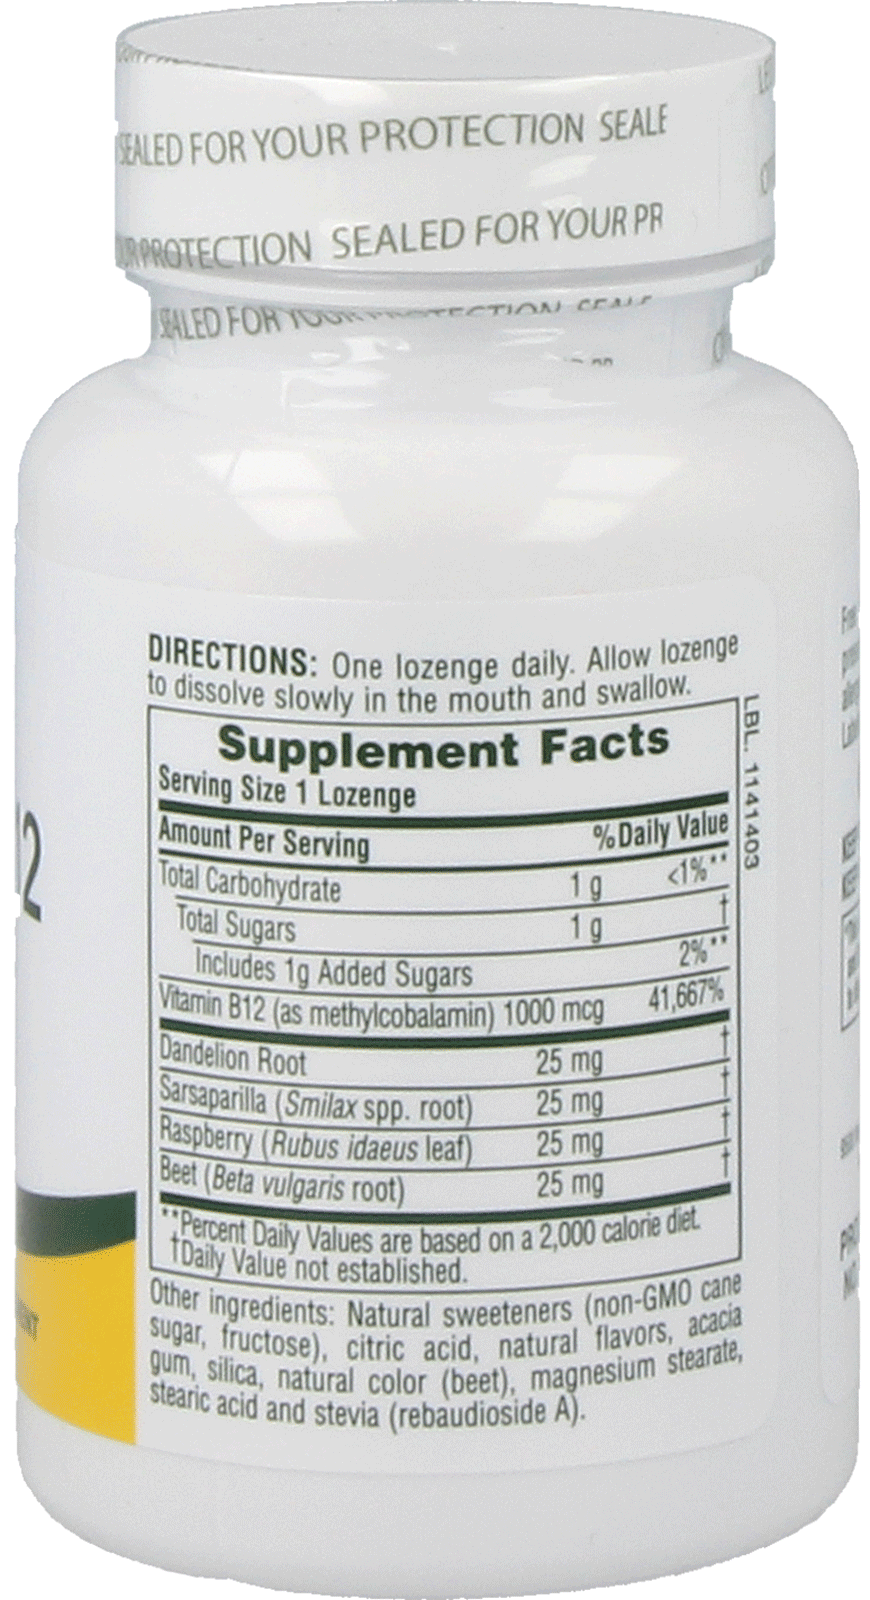 Vitamin B12 Herbal Lozenges 